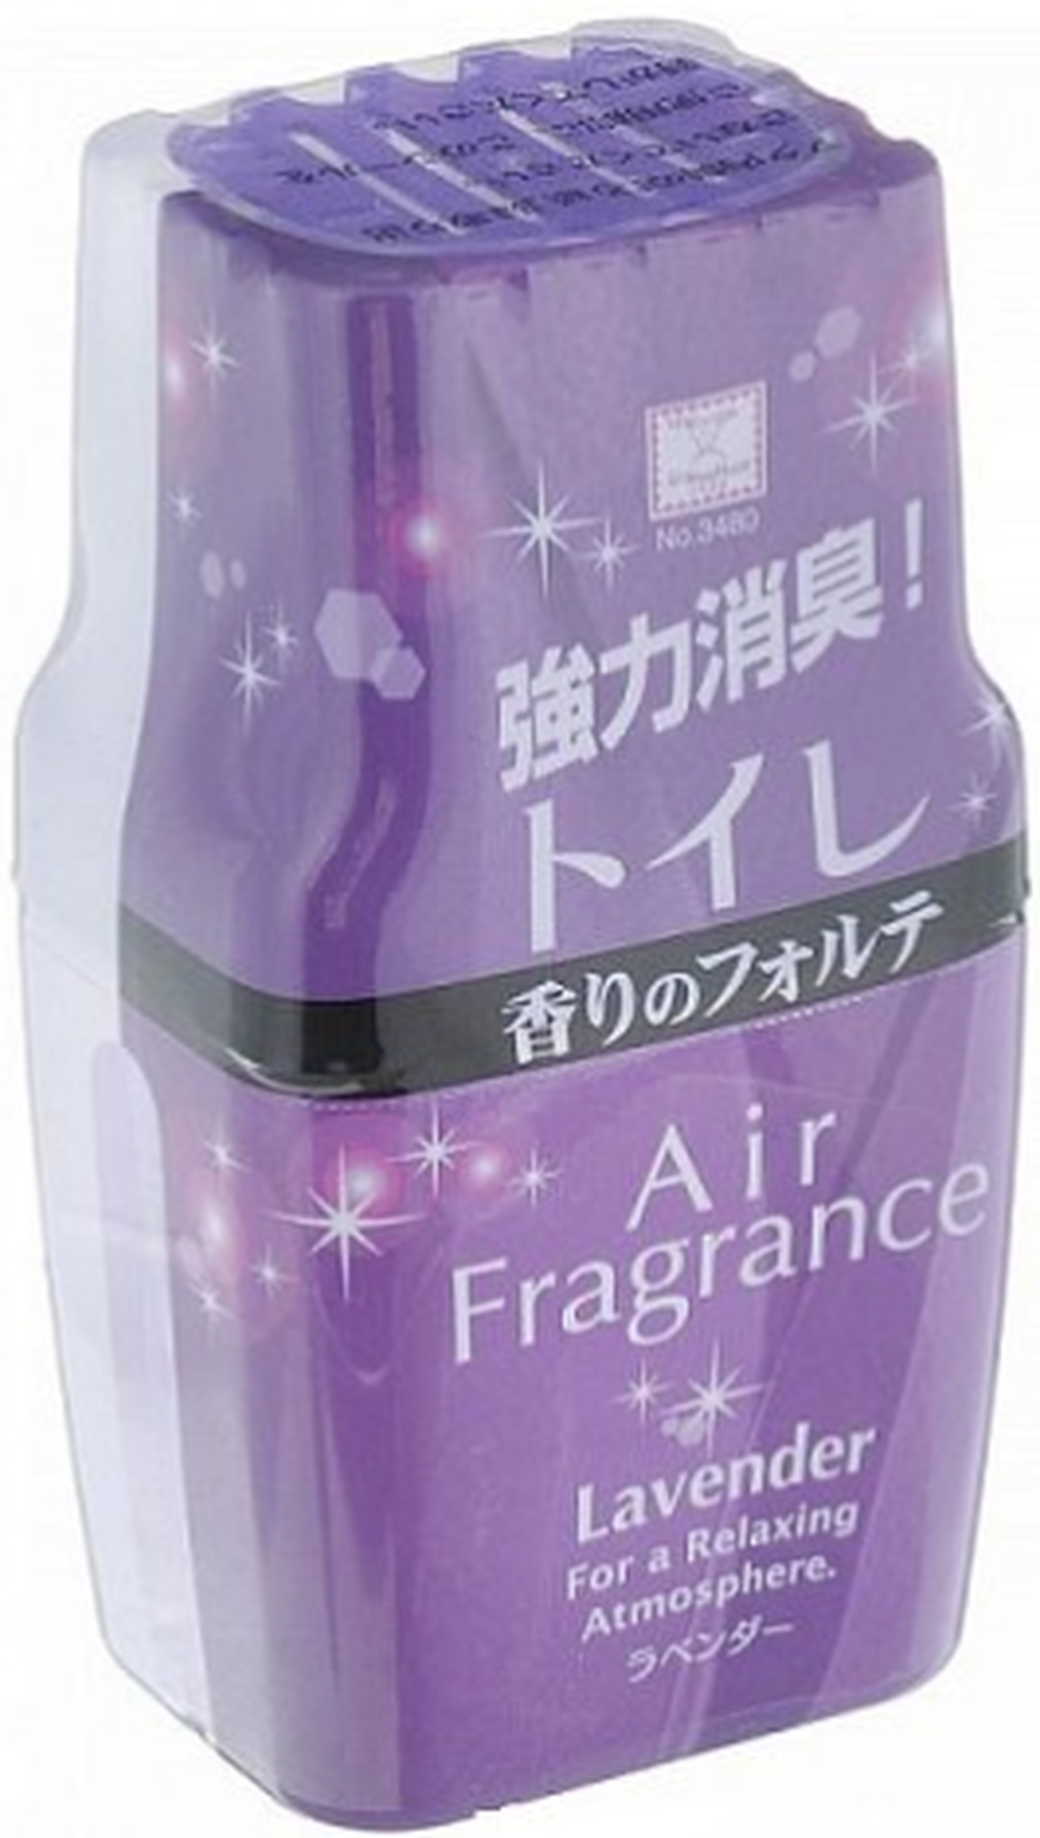 Фильтр посторонних запахов в туалете Air Fragrance с ароматом лаванды 200 мл фото